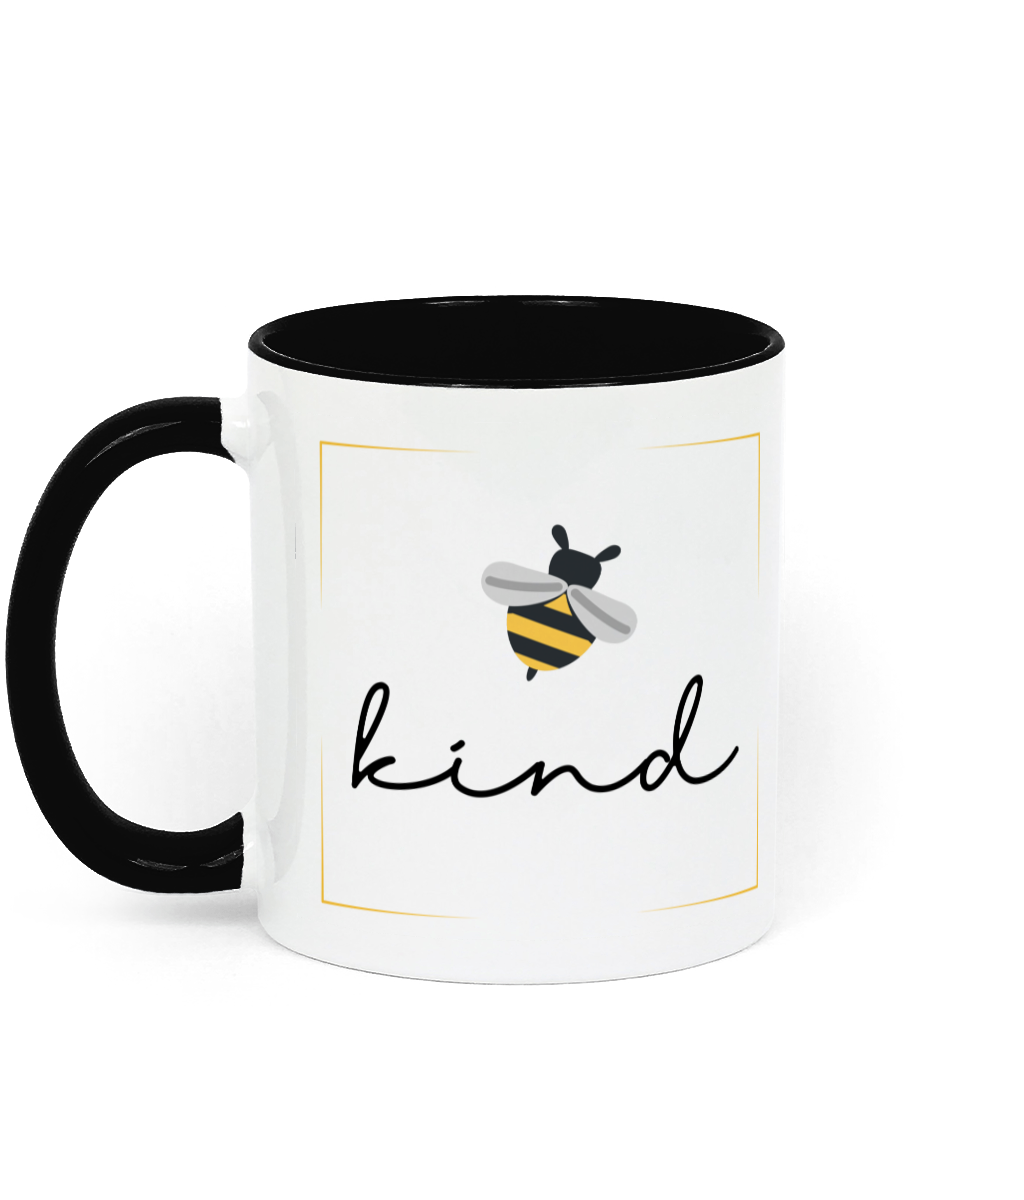 Be Kind Mug.11 oz mug. Daily Affirmations, Motivation, Inspiration. Perfect Gift. Two-toned. Black